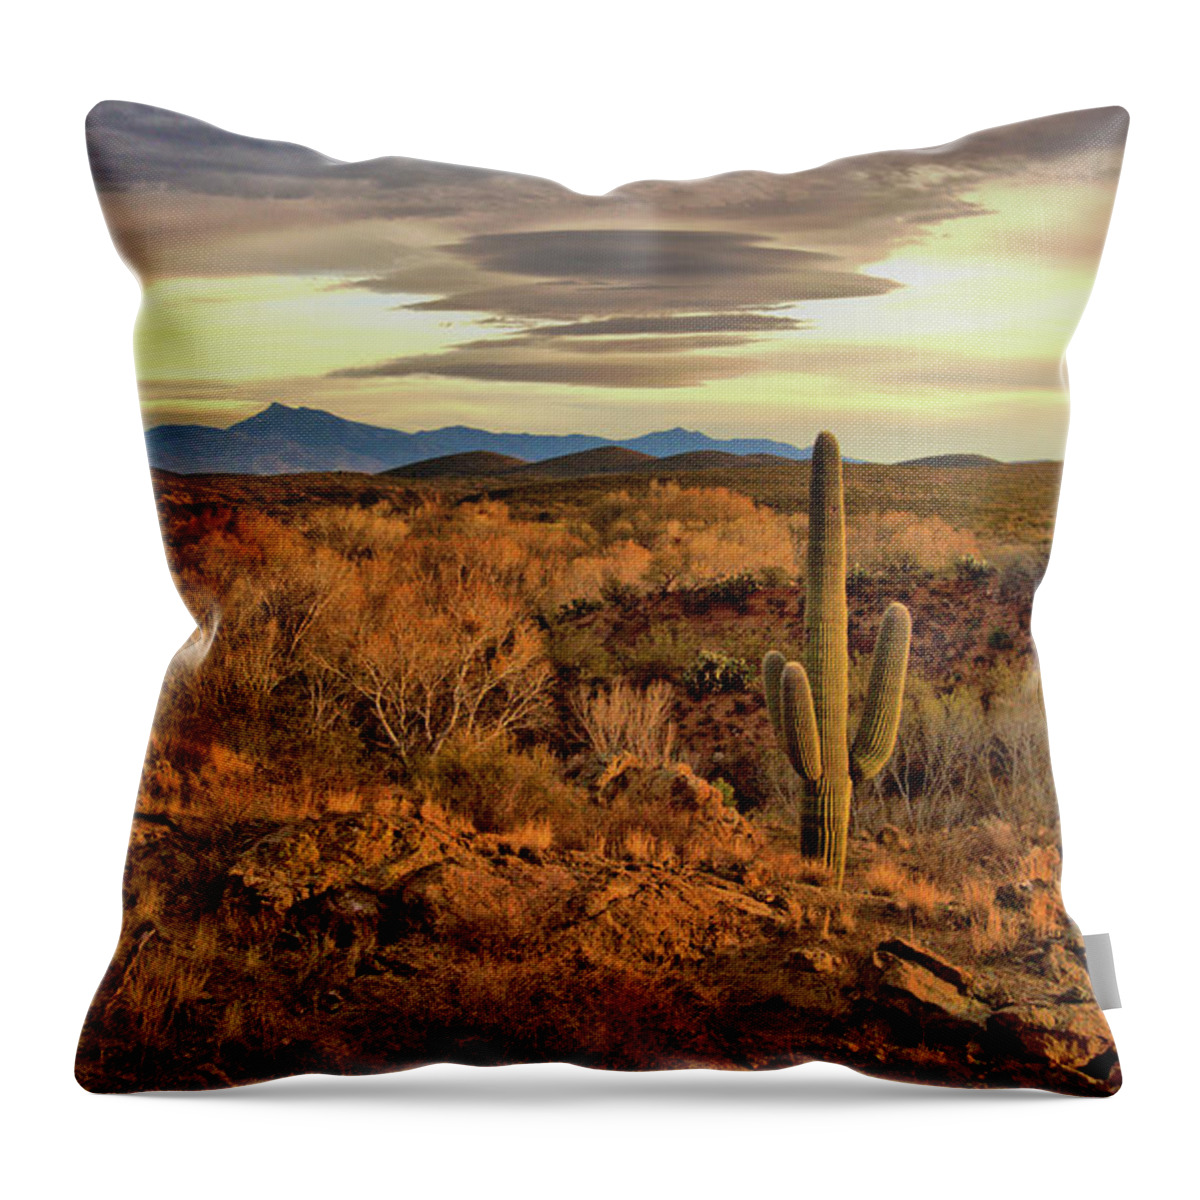 Landscape Throw Pillow featuring the photograph Cienega Creek Sunset by Josephine Buschman